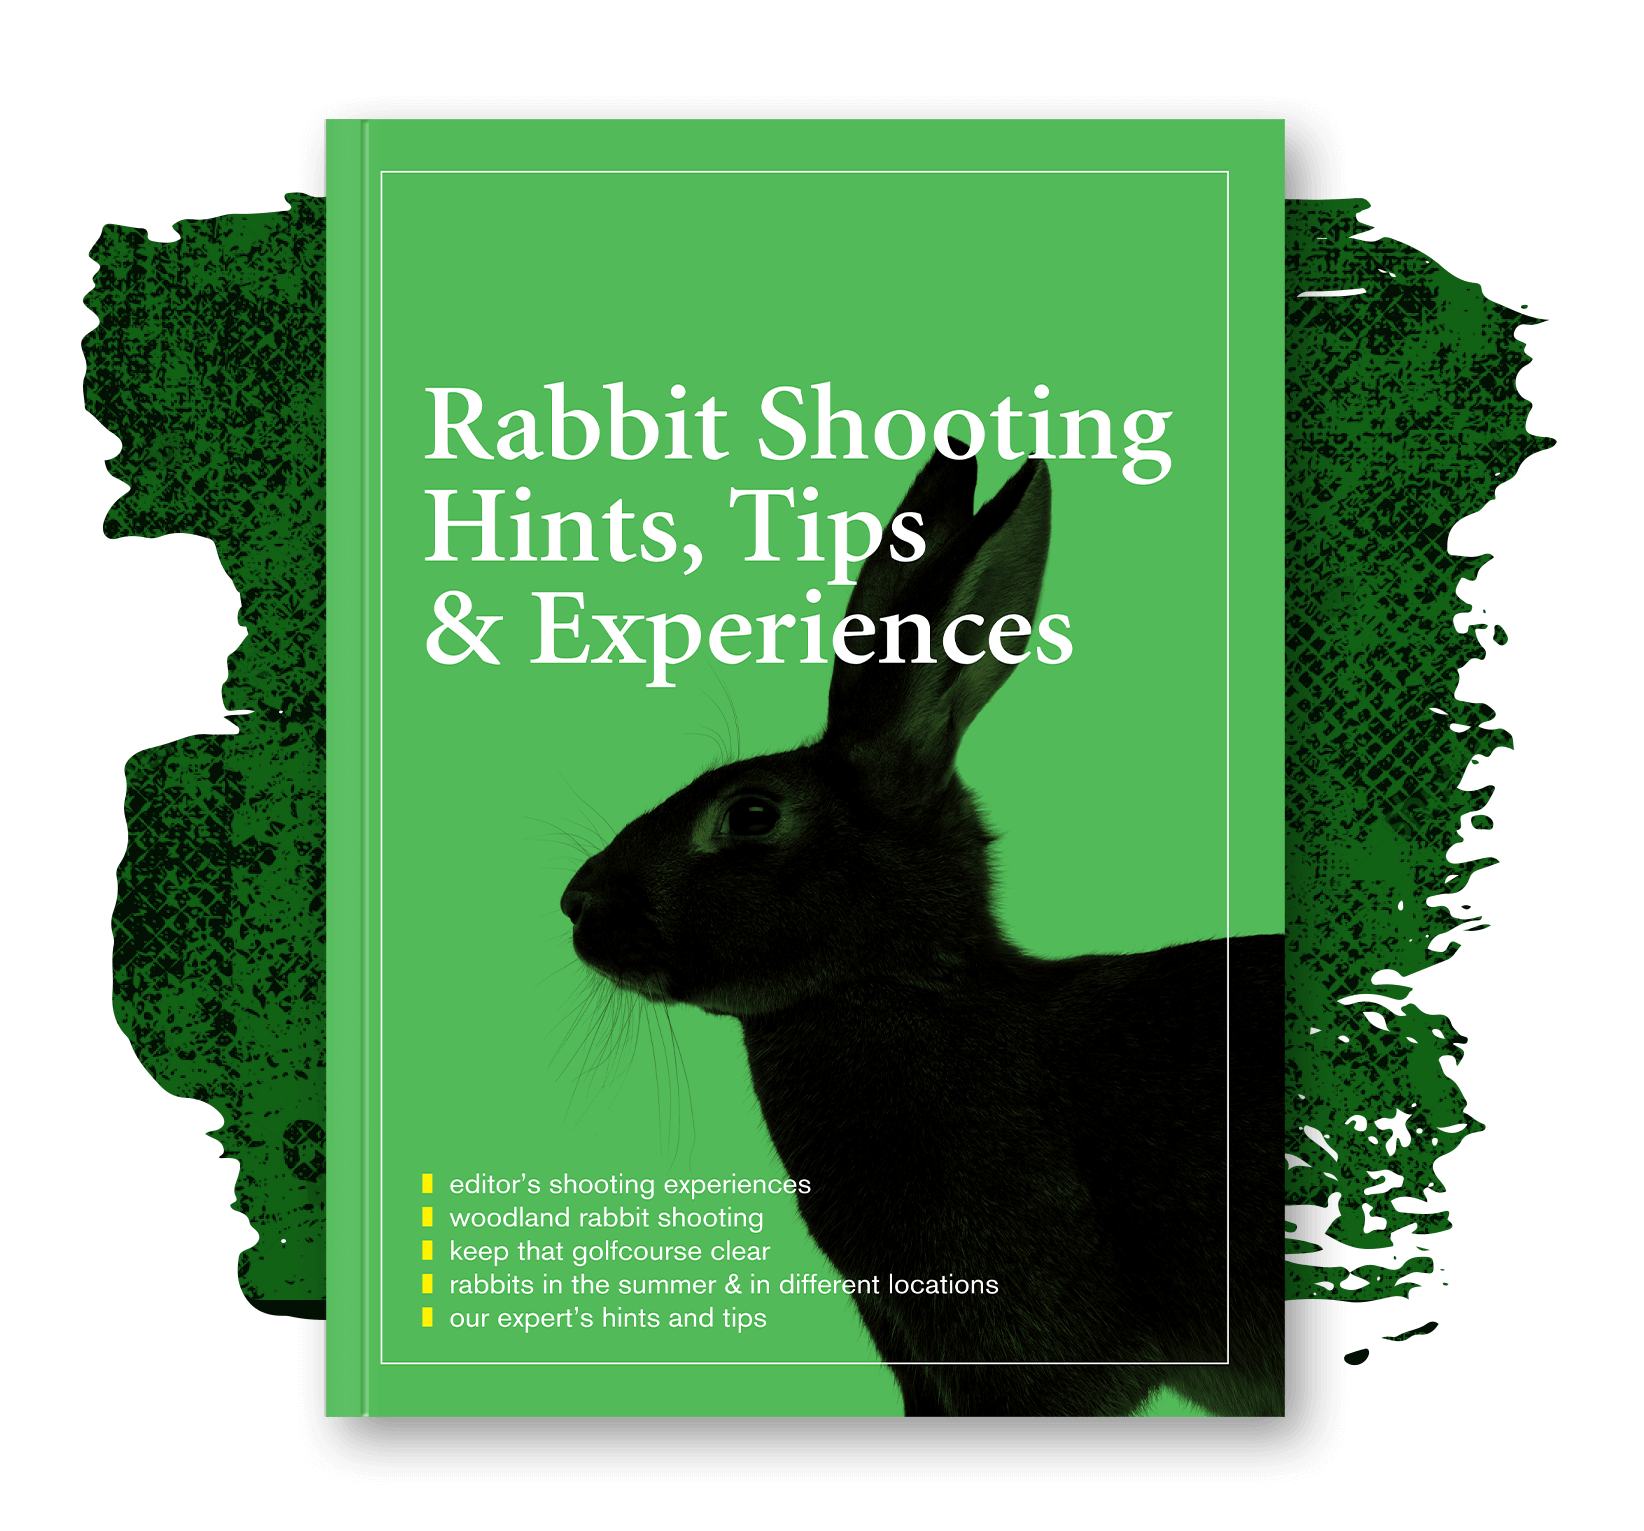 Rabbit Shooting, Hints, Tips & Experiences